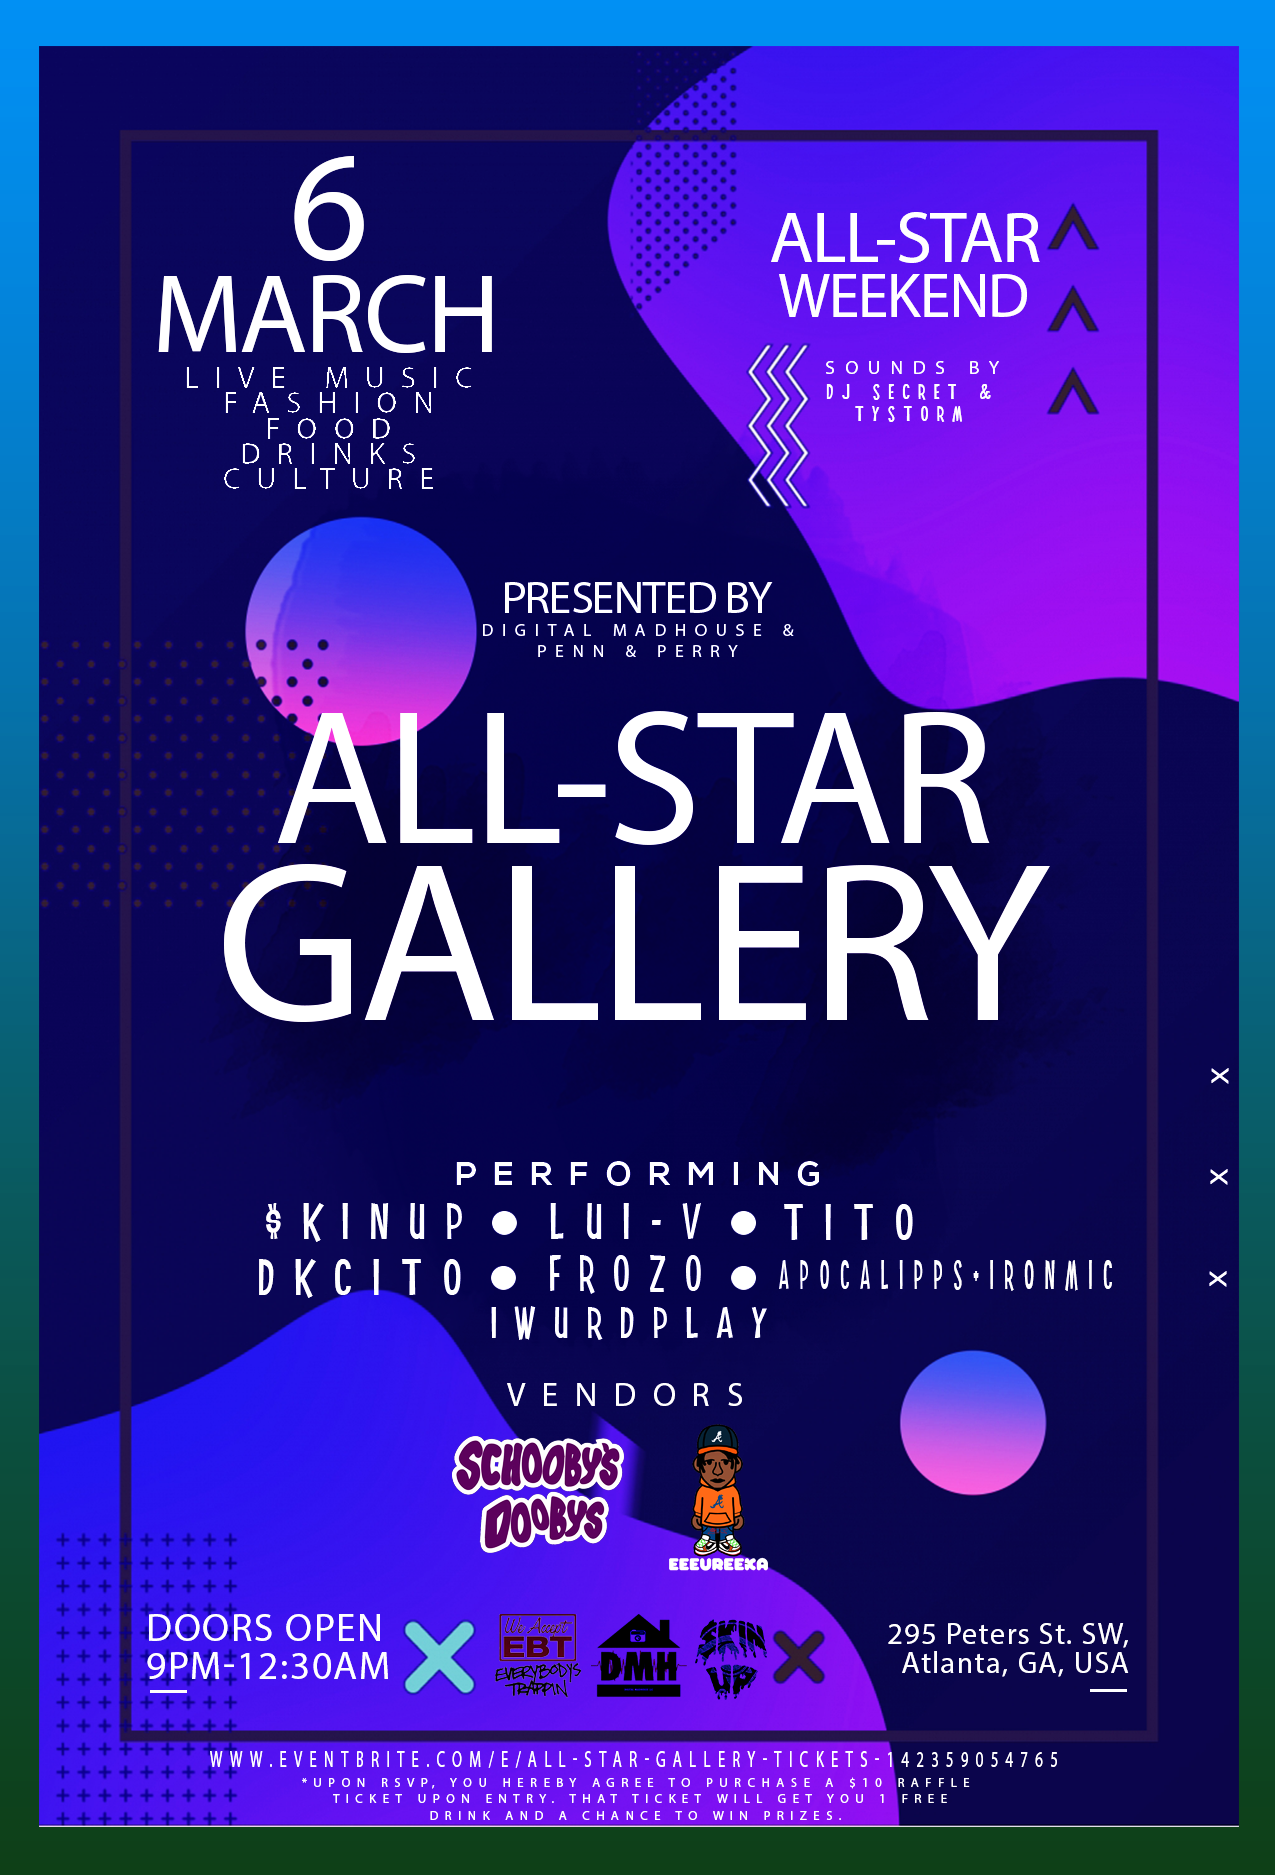 All-Star Gallery